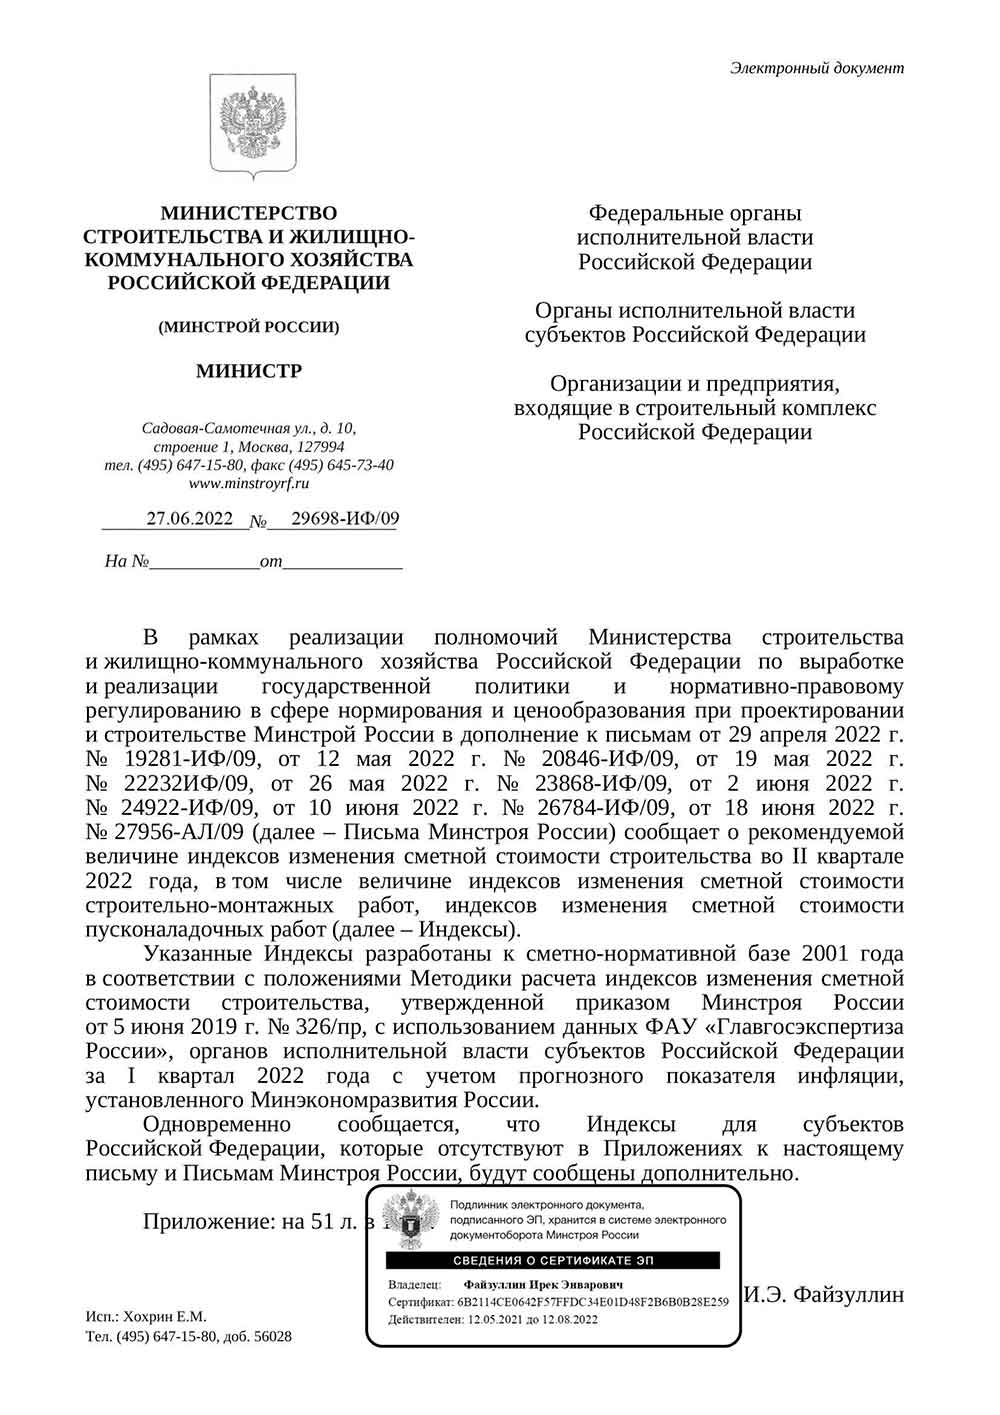 Письмо Минстроя РФ №29698-ИФ/09 от 27.06.2022 г.